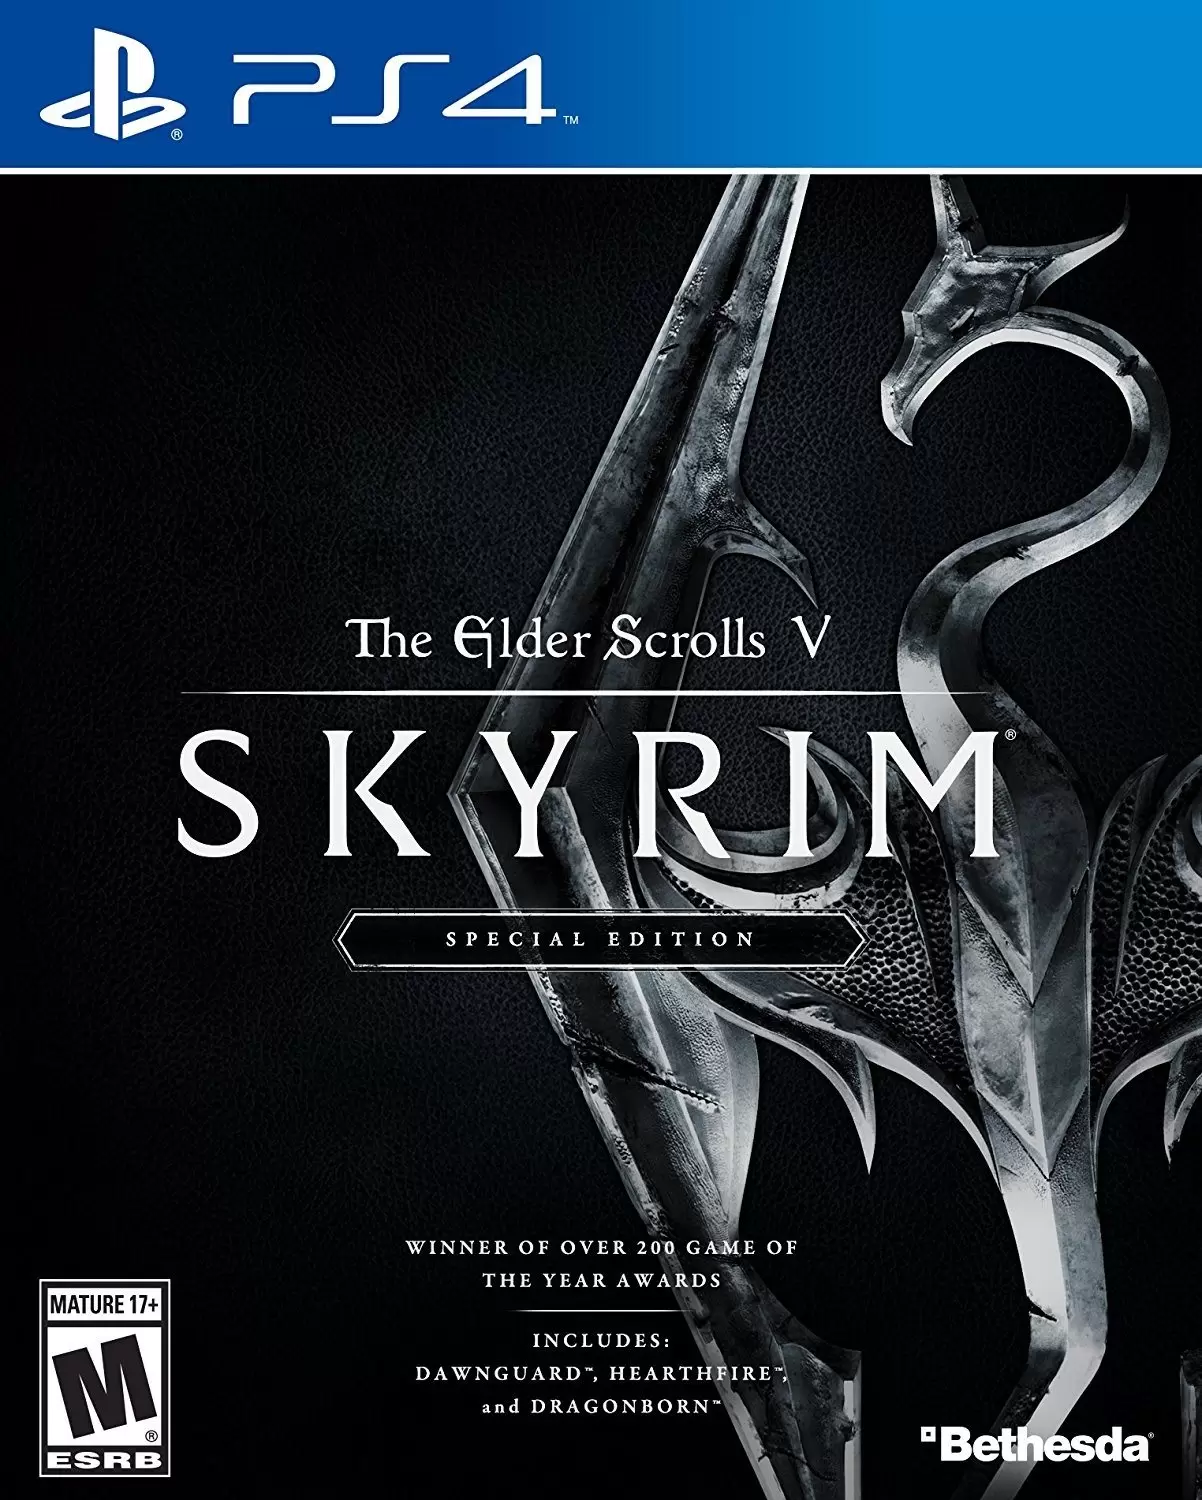 PS4 Games - The Elder Scrolls V: Skyrim Special Edition